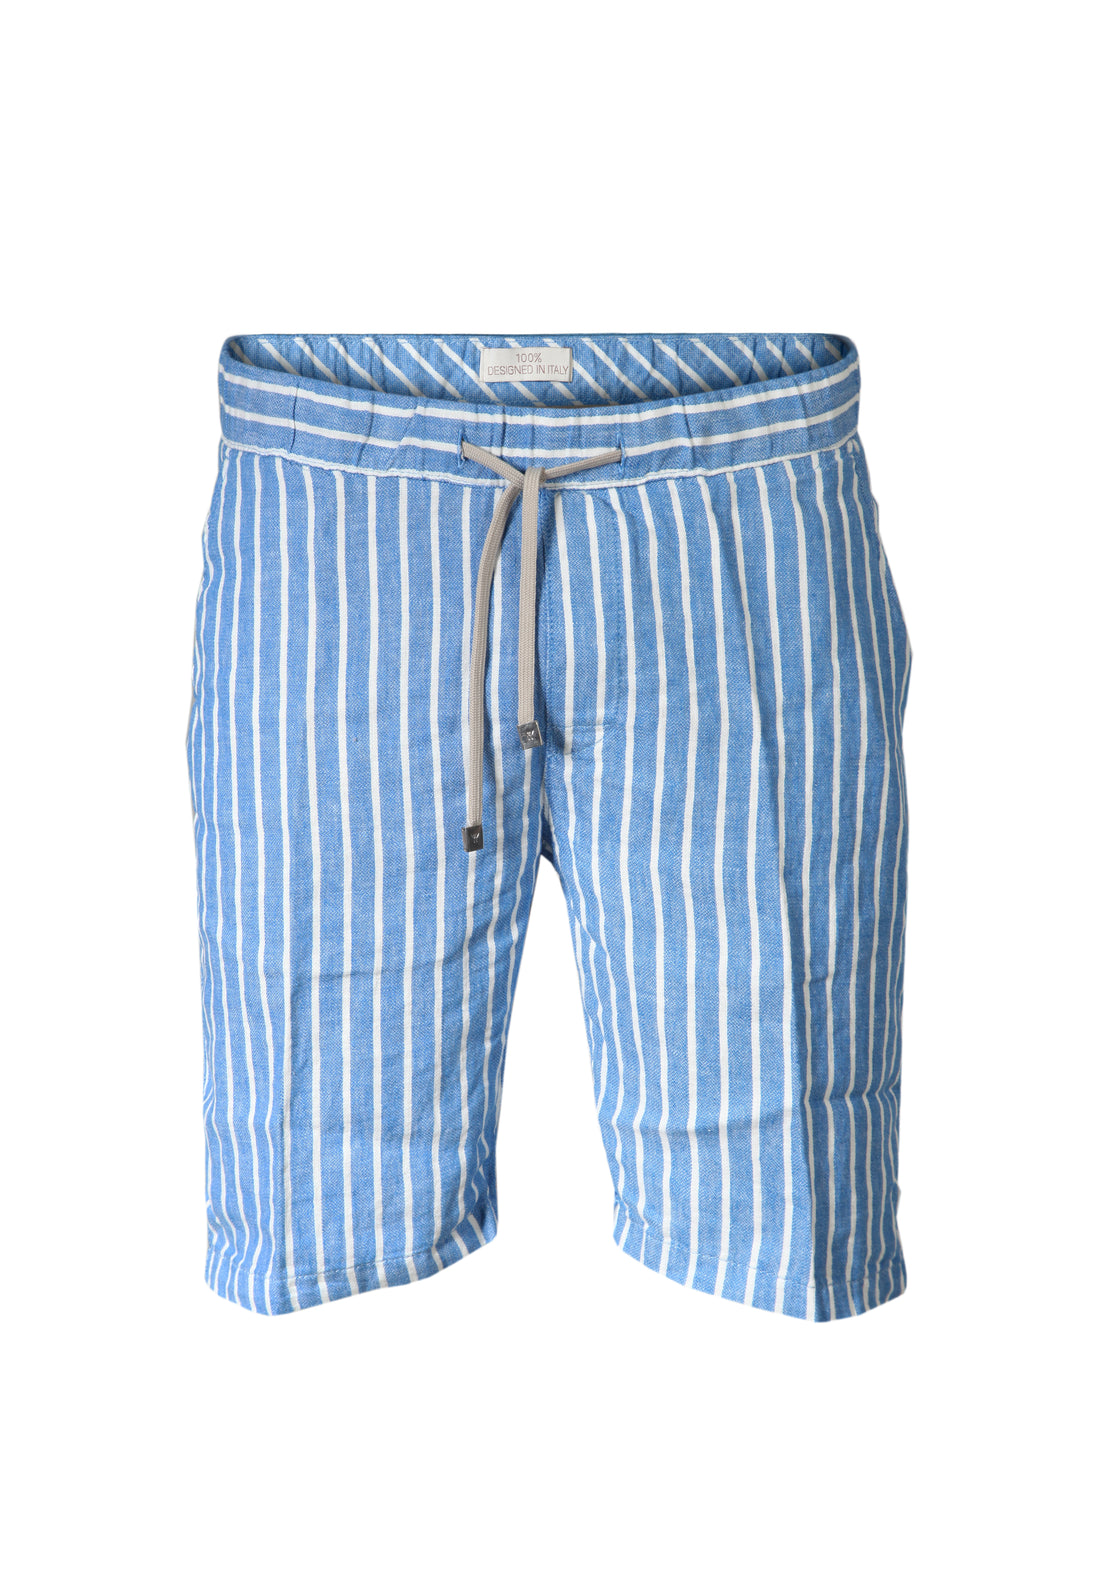 Striped Bermuda shorts with lace in Linen - Bluette